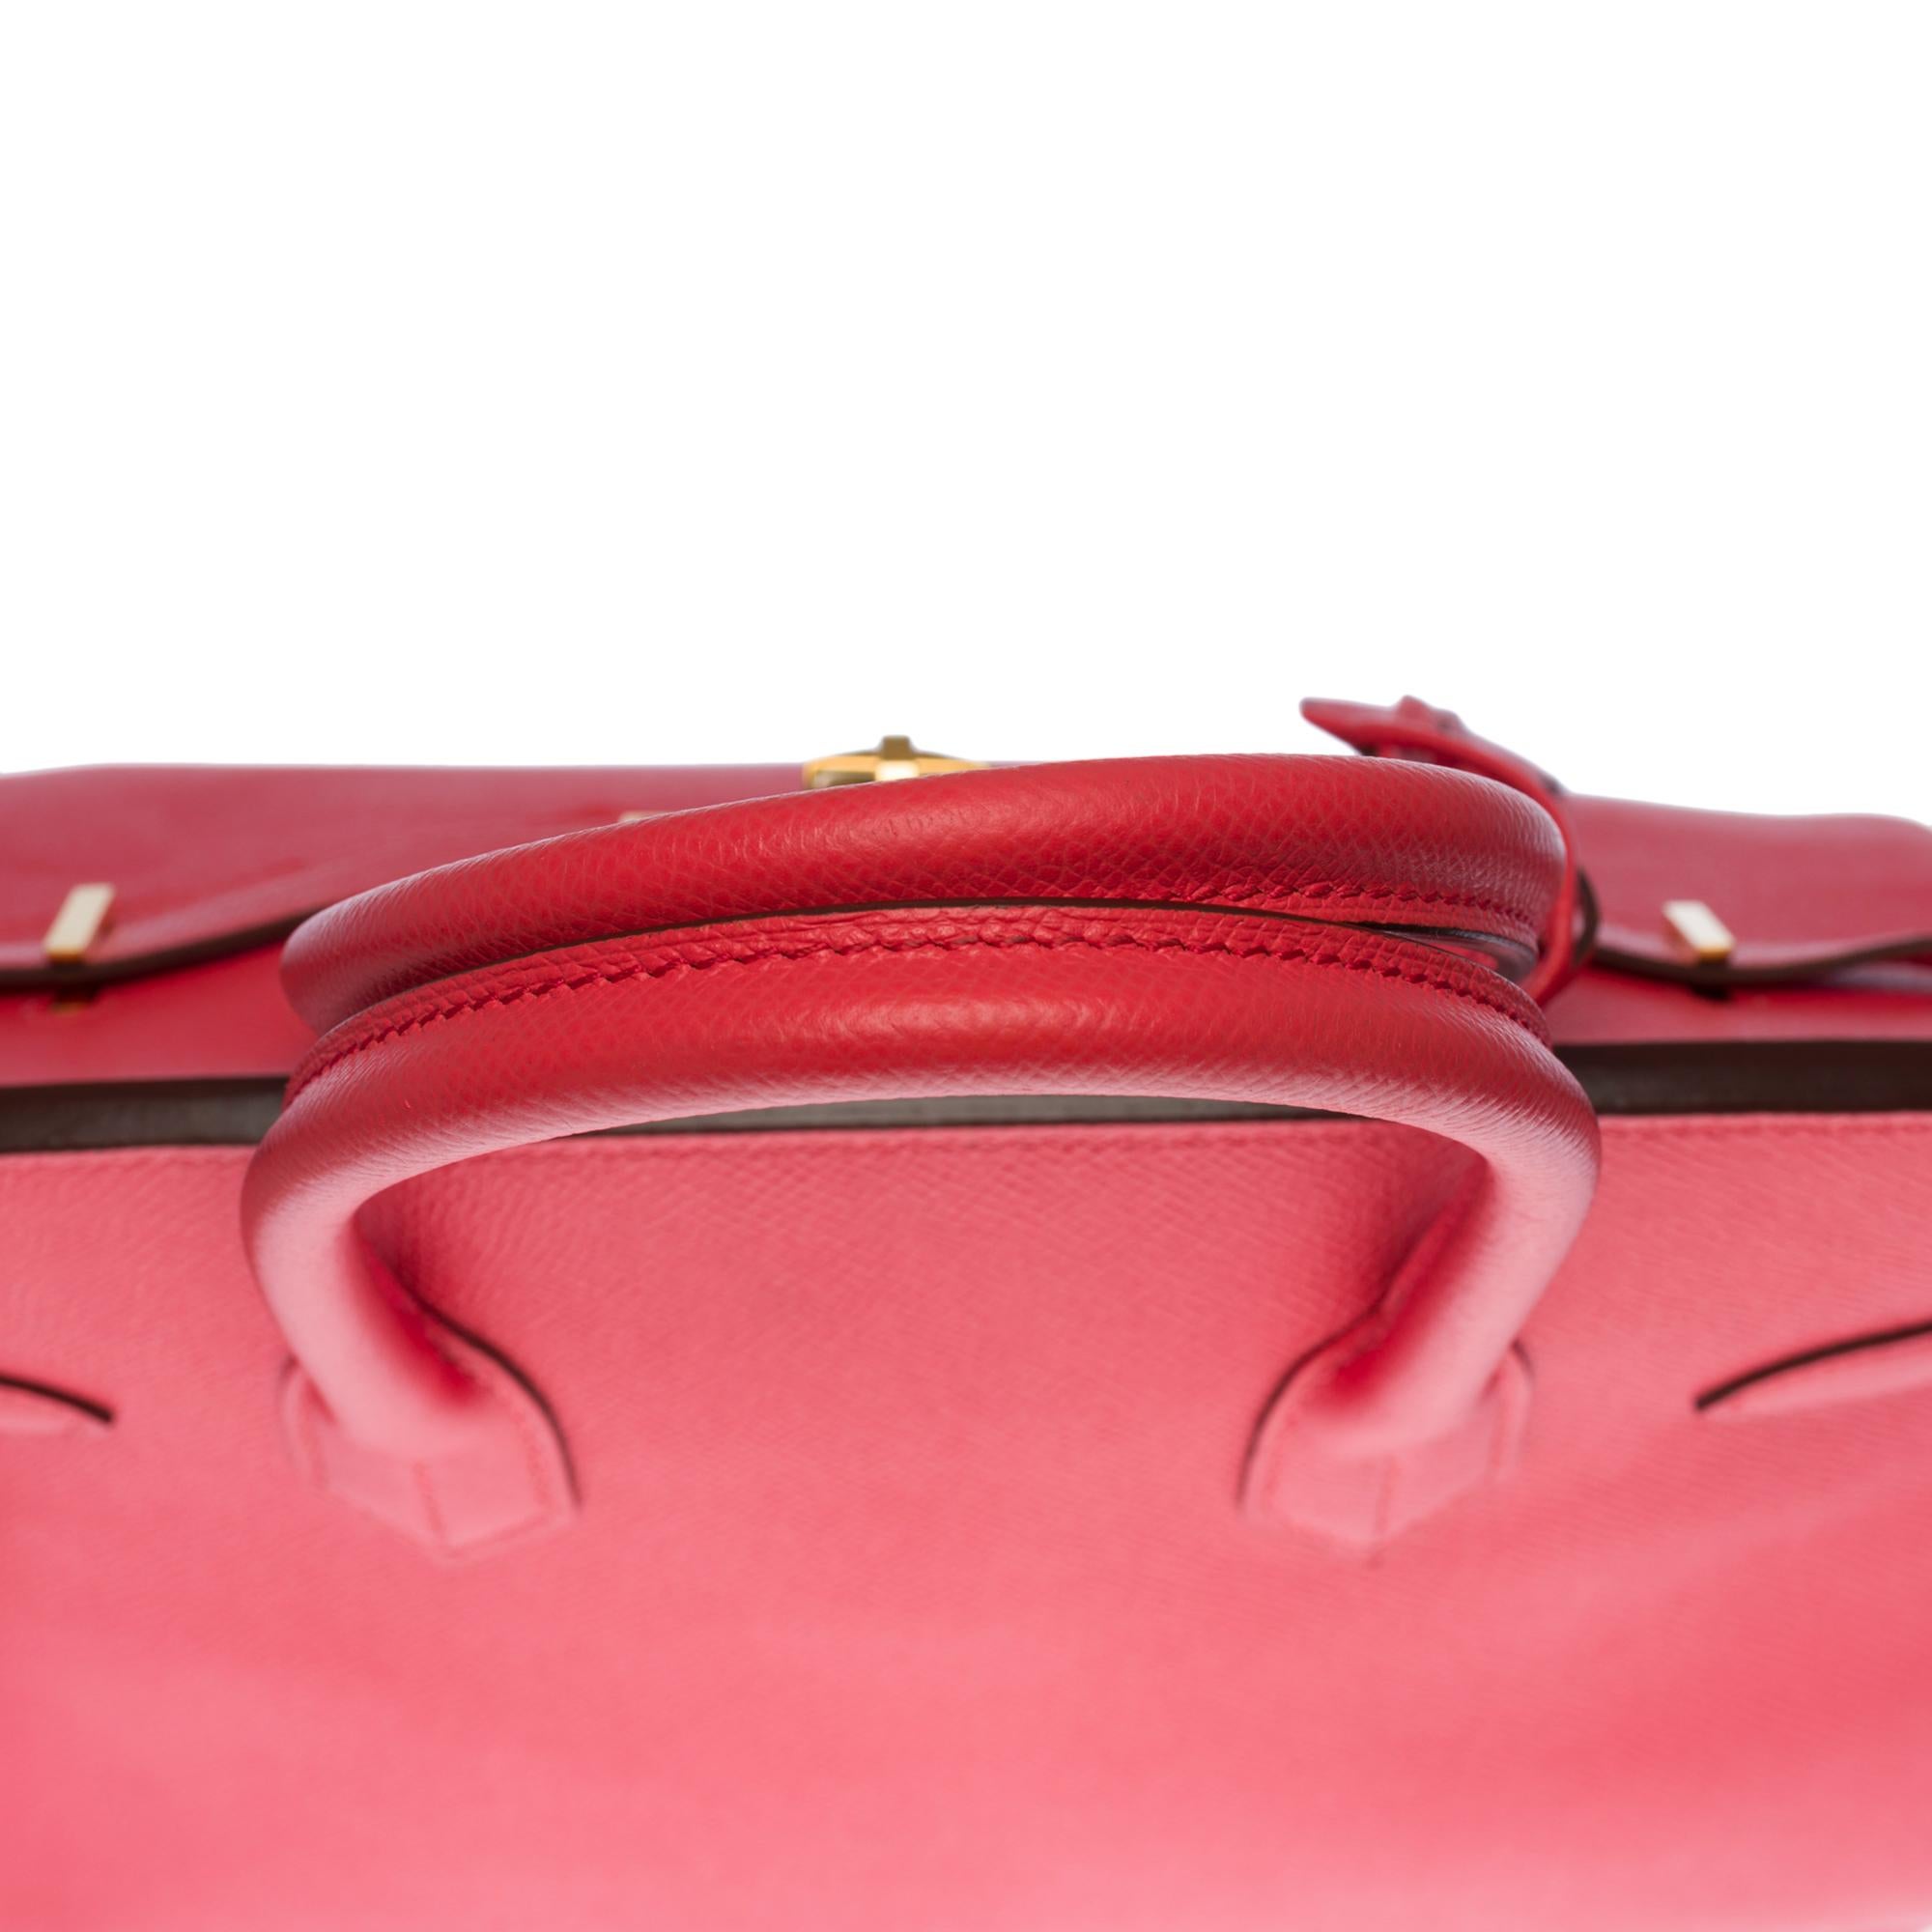 Almost New - Hermès Birkin 30 handbag in Rose Jaïpur Epsom leather, GHW 3